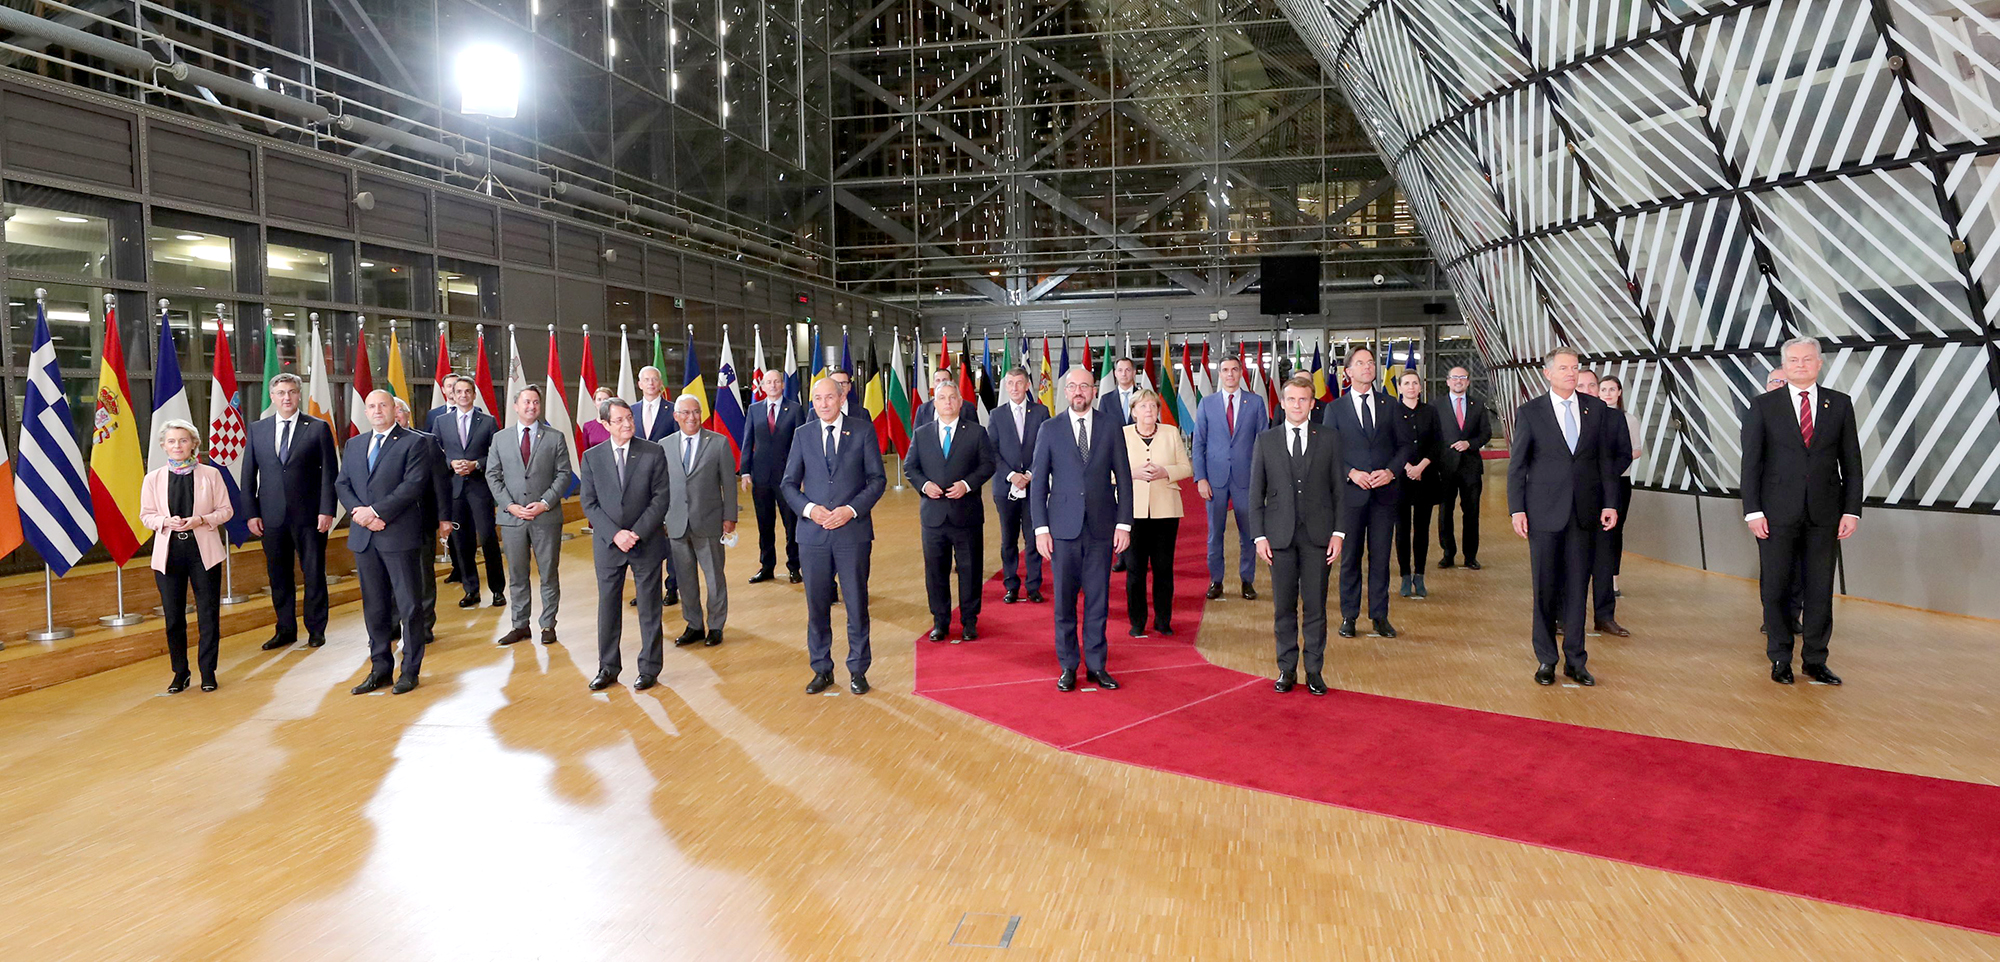 Family photo of EU leaders